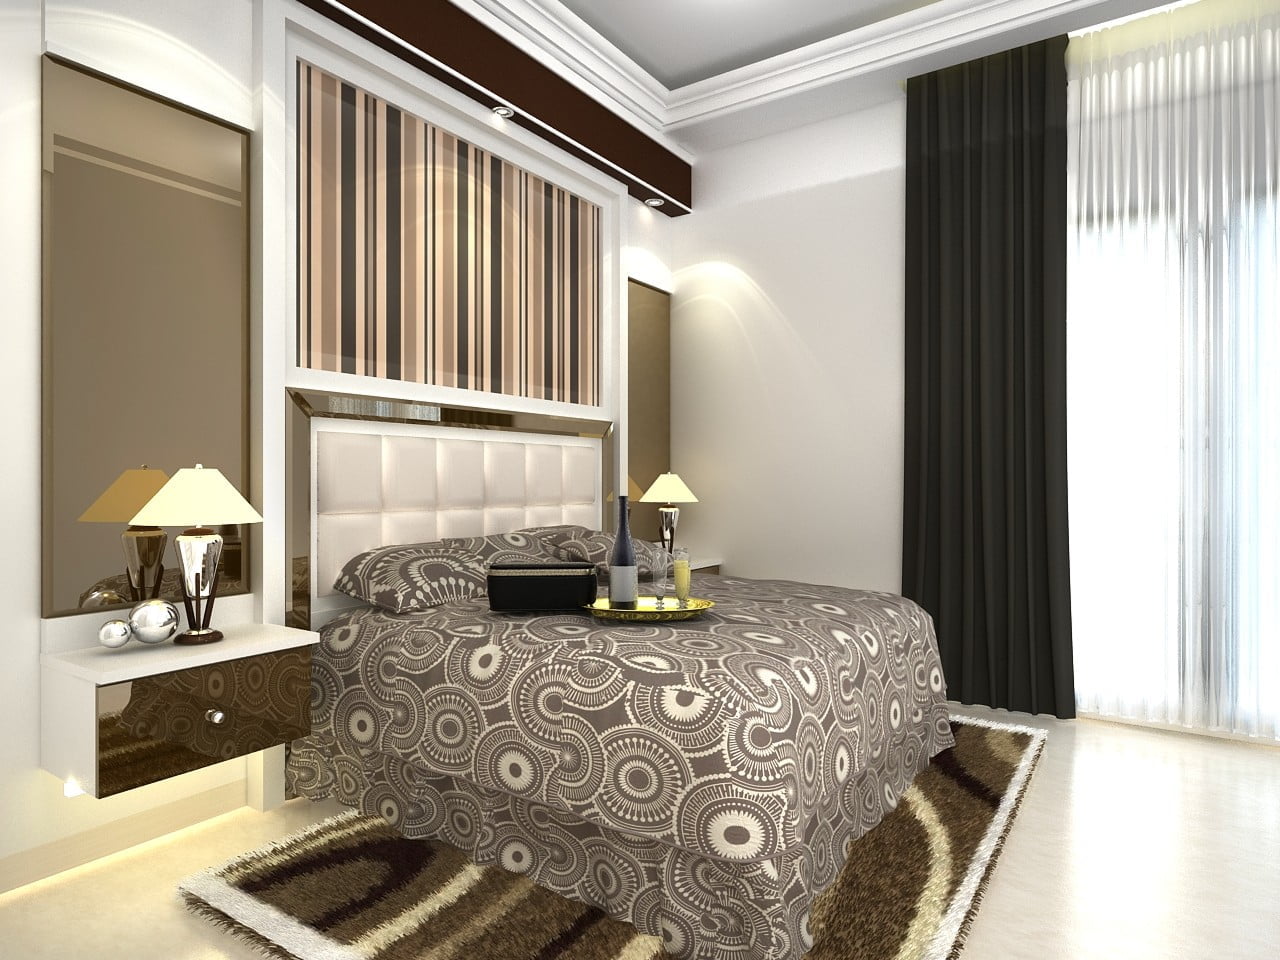 halim interior Minimalis rt3 bed set